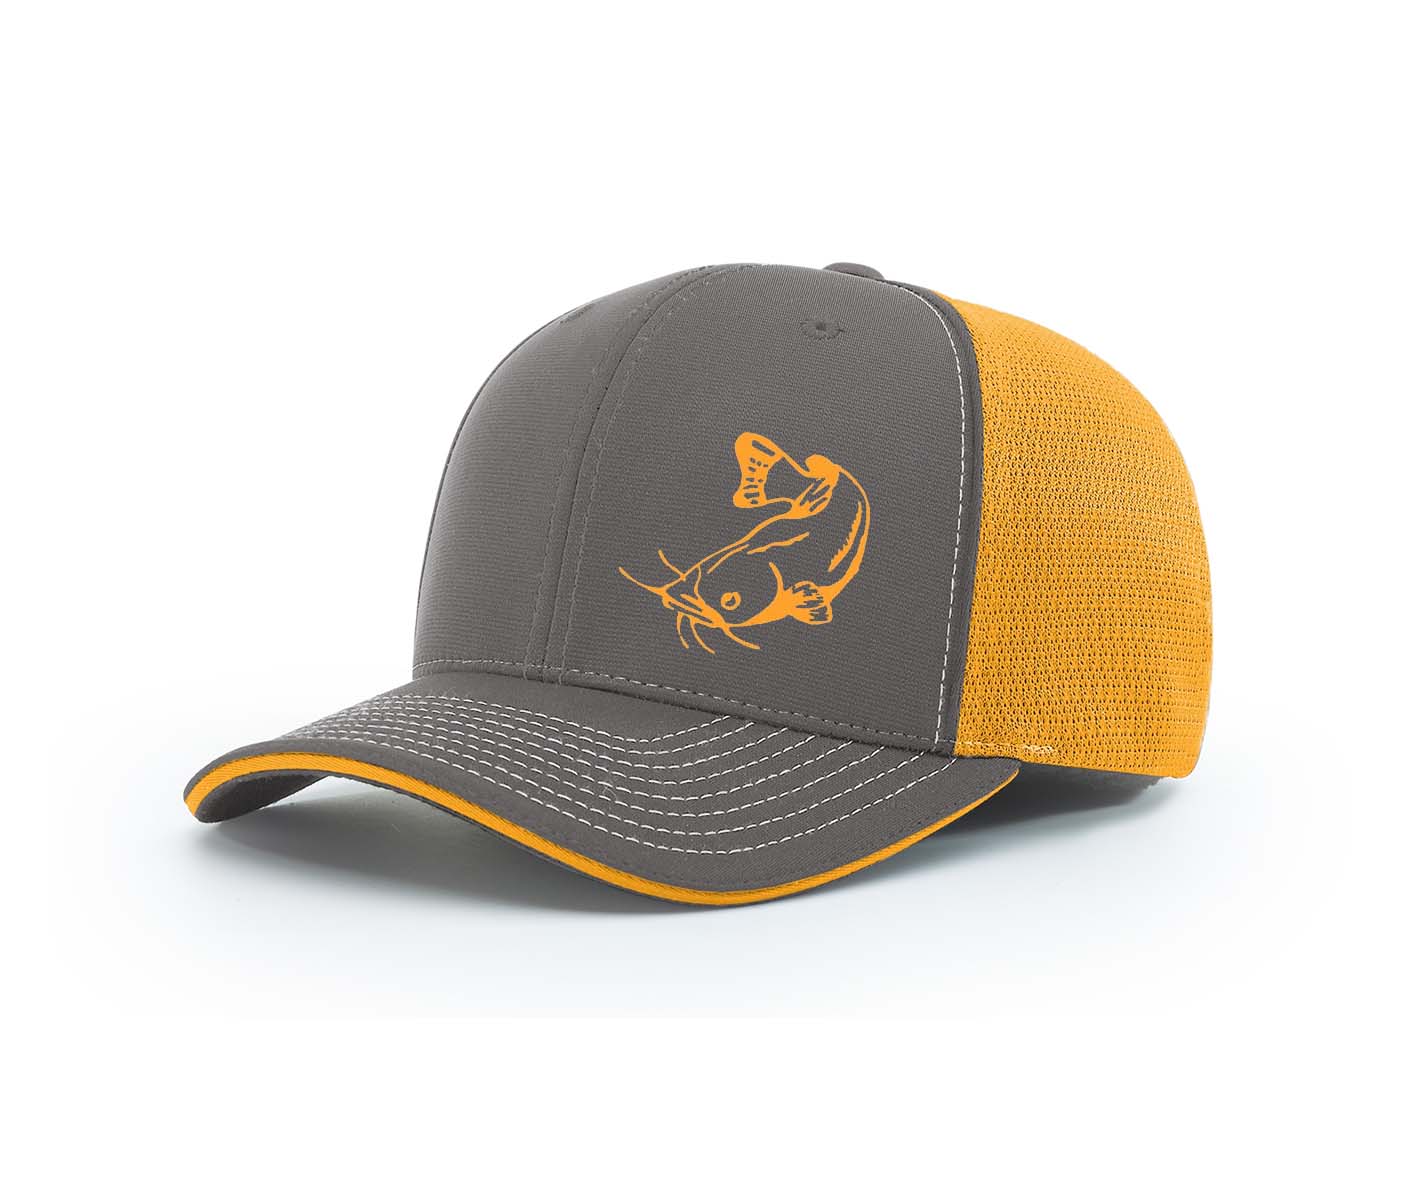 Catfish Swamp Cracker Flex Fit Outdoorsman Hat, Small/Medium / Charcoal/Neon Orange